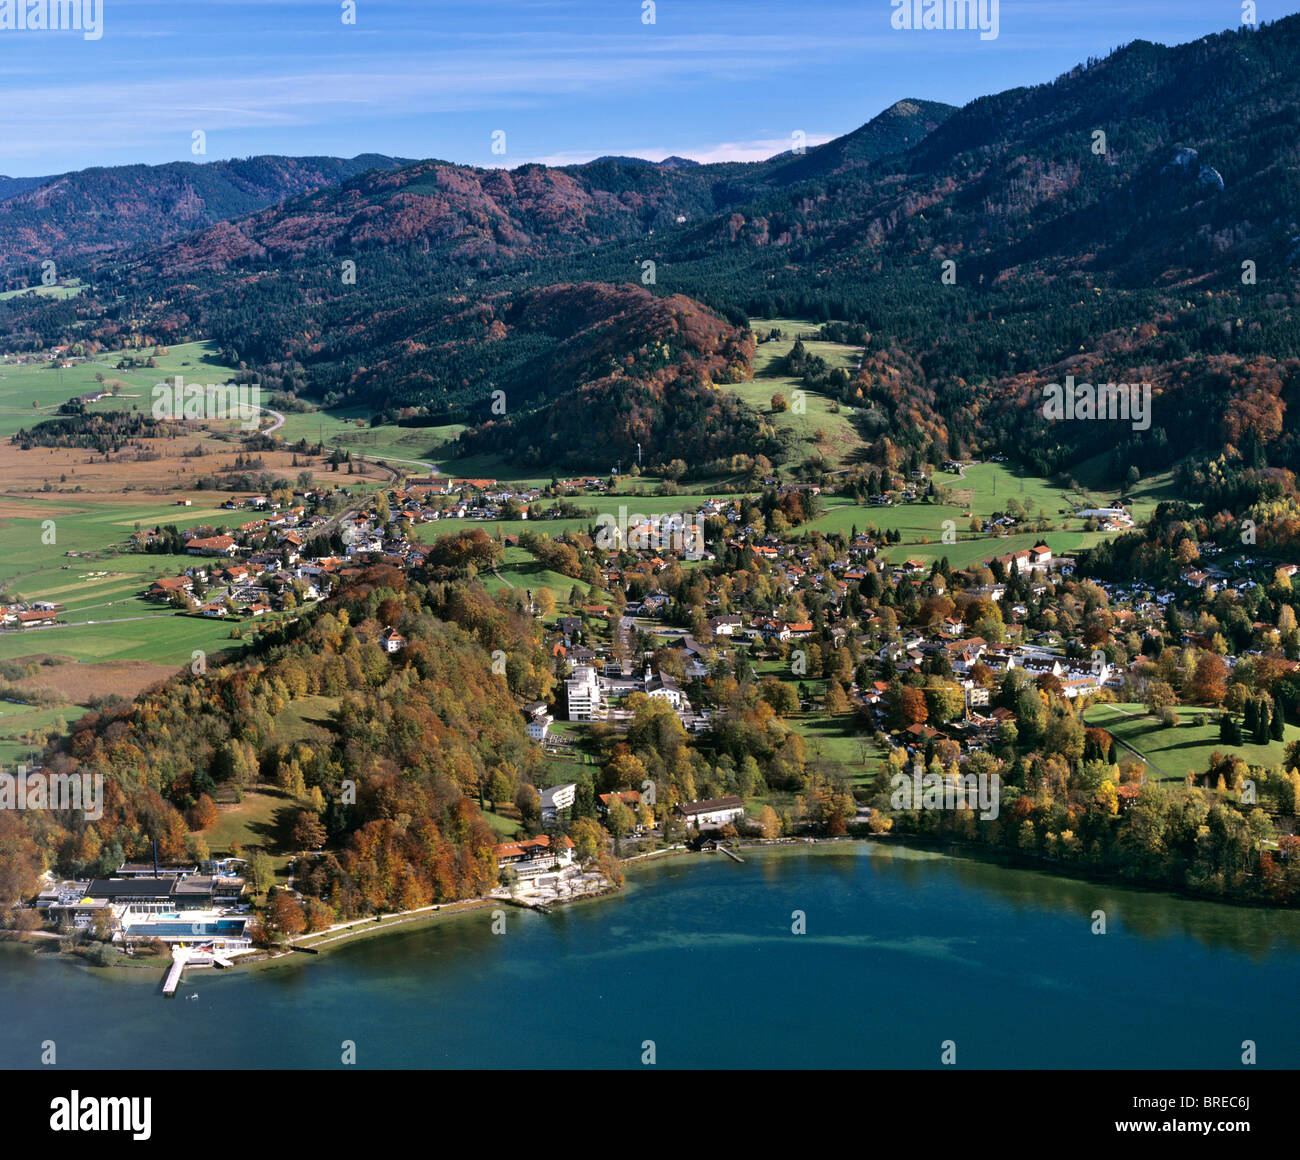 Kochel con lago Kochelsee, Trimini, Alta Baviera, Germania, Europa, vista aerea Foto Stock